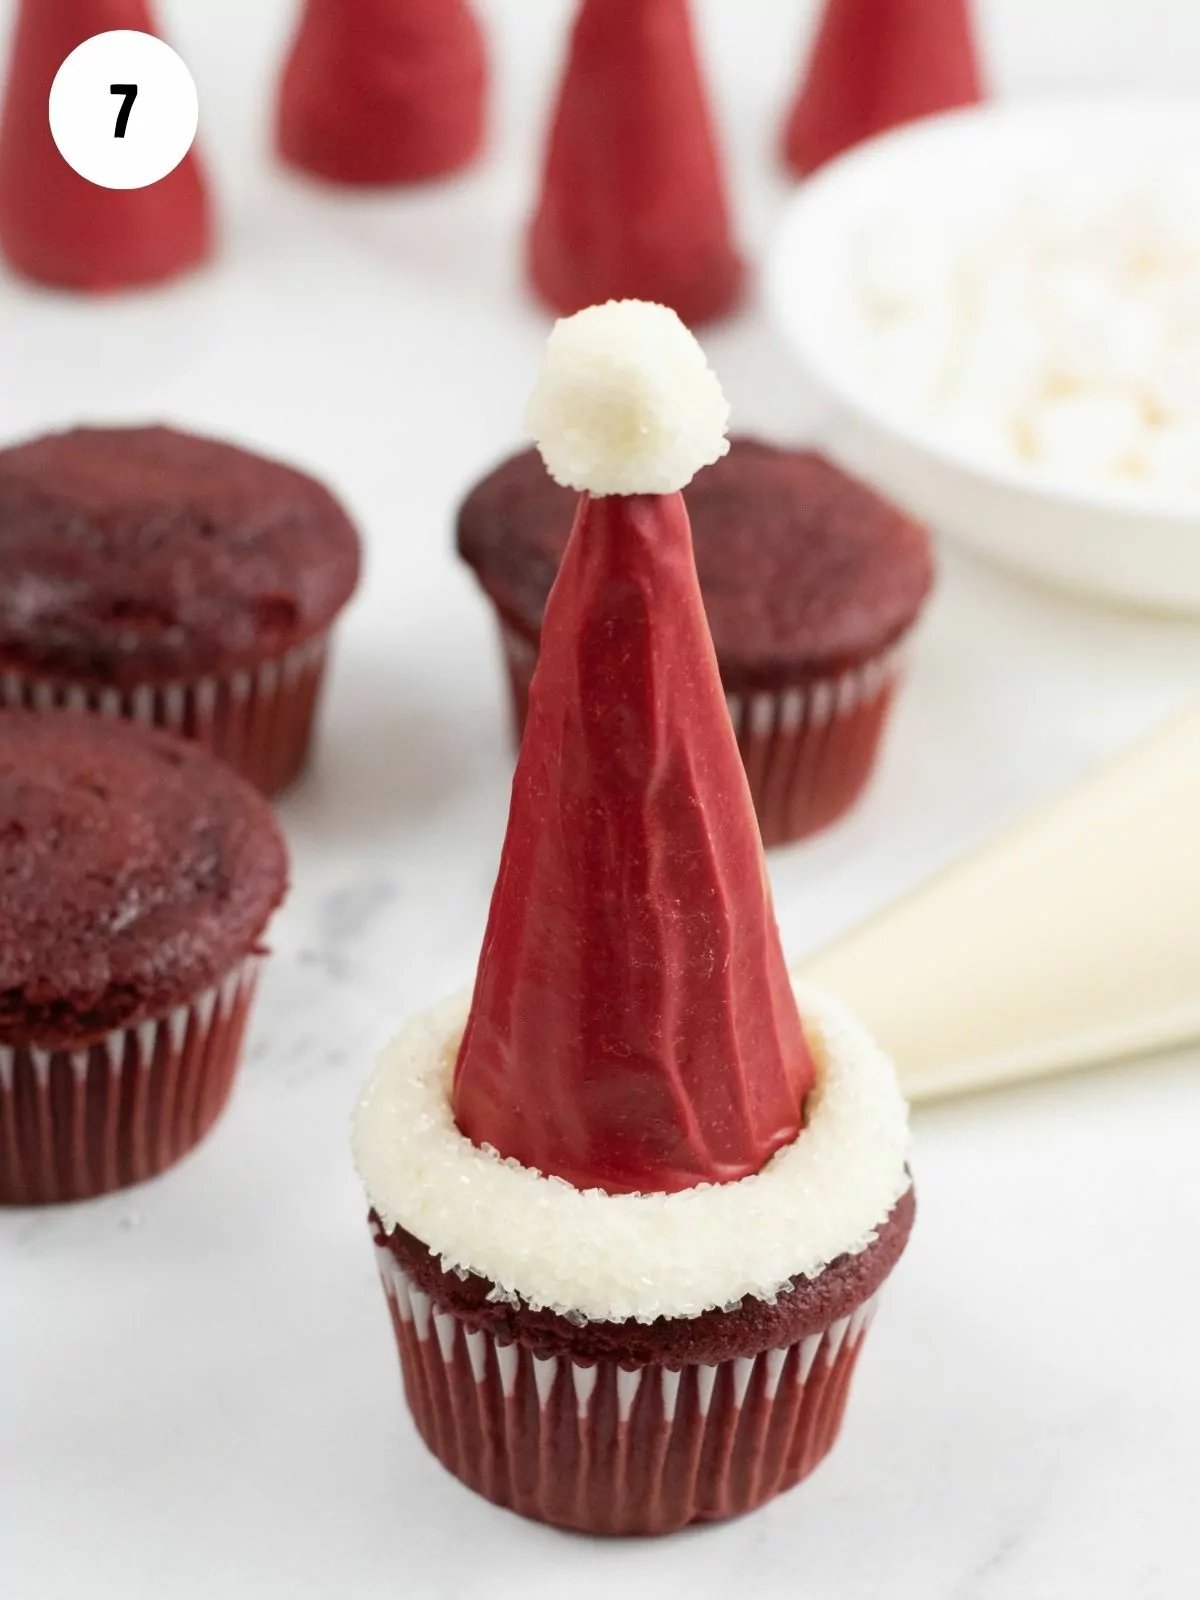 cupcake decorated with Santa hat ice cream cone.